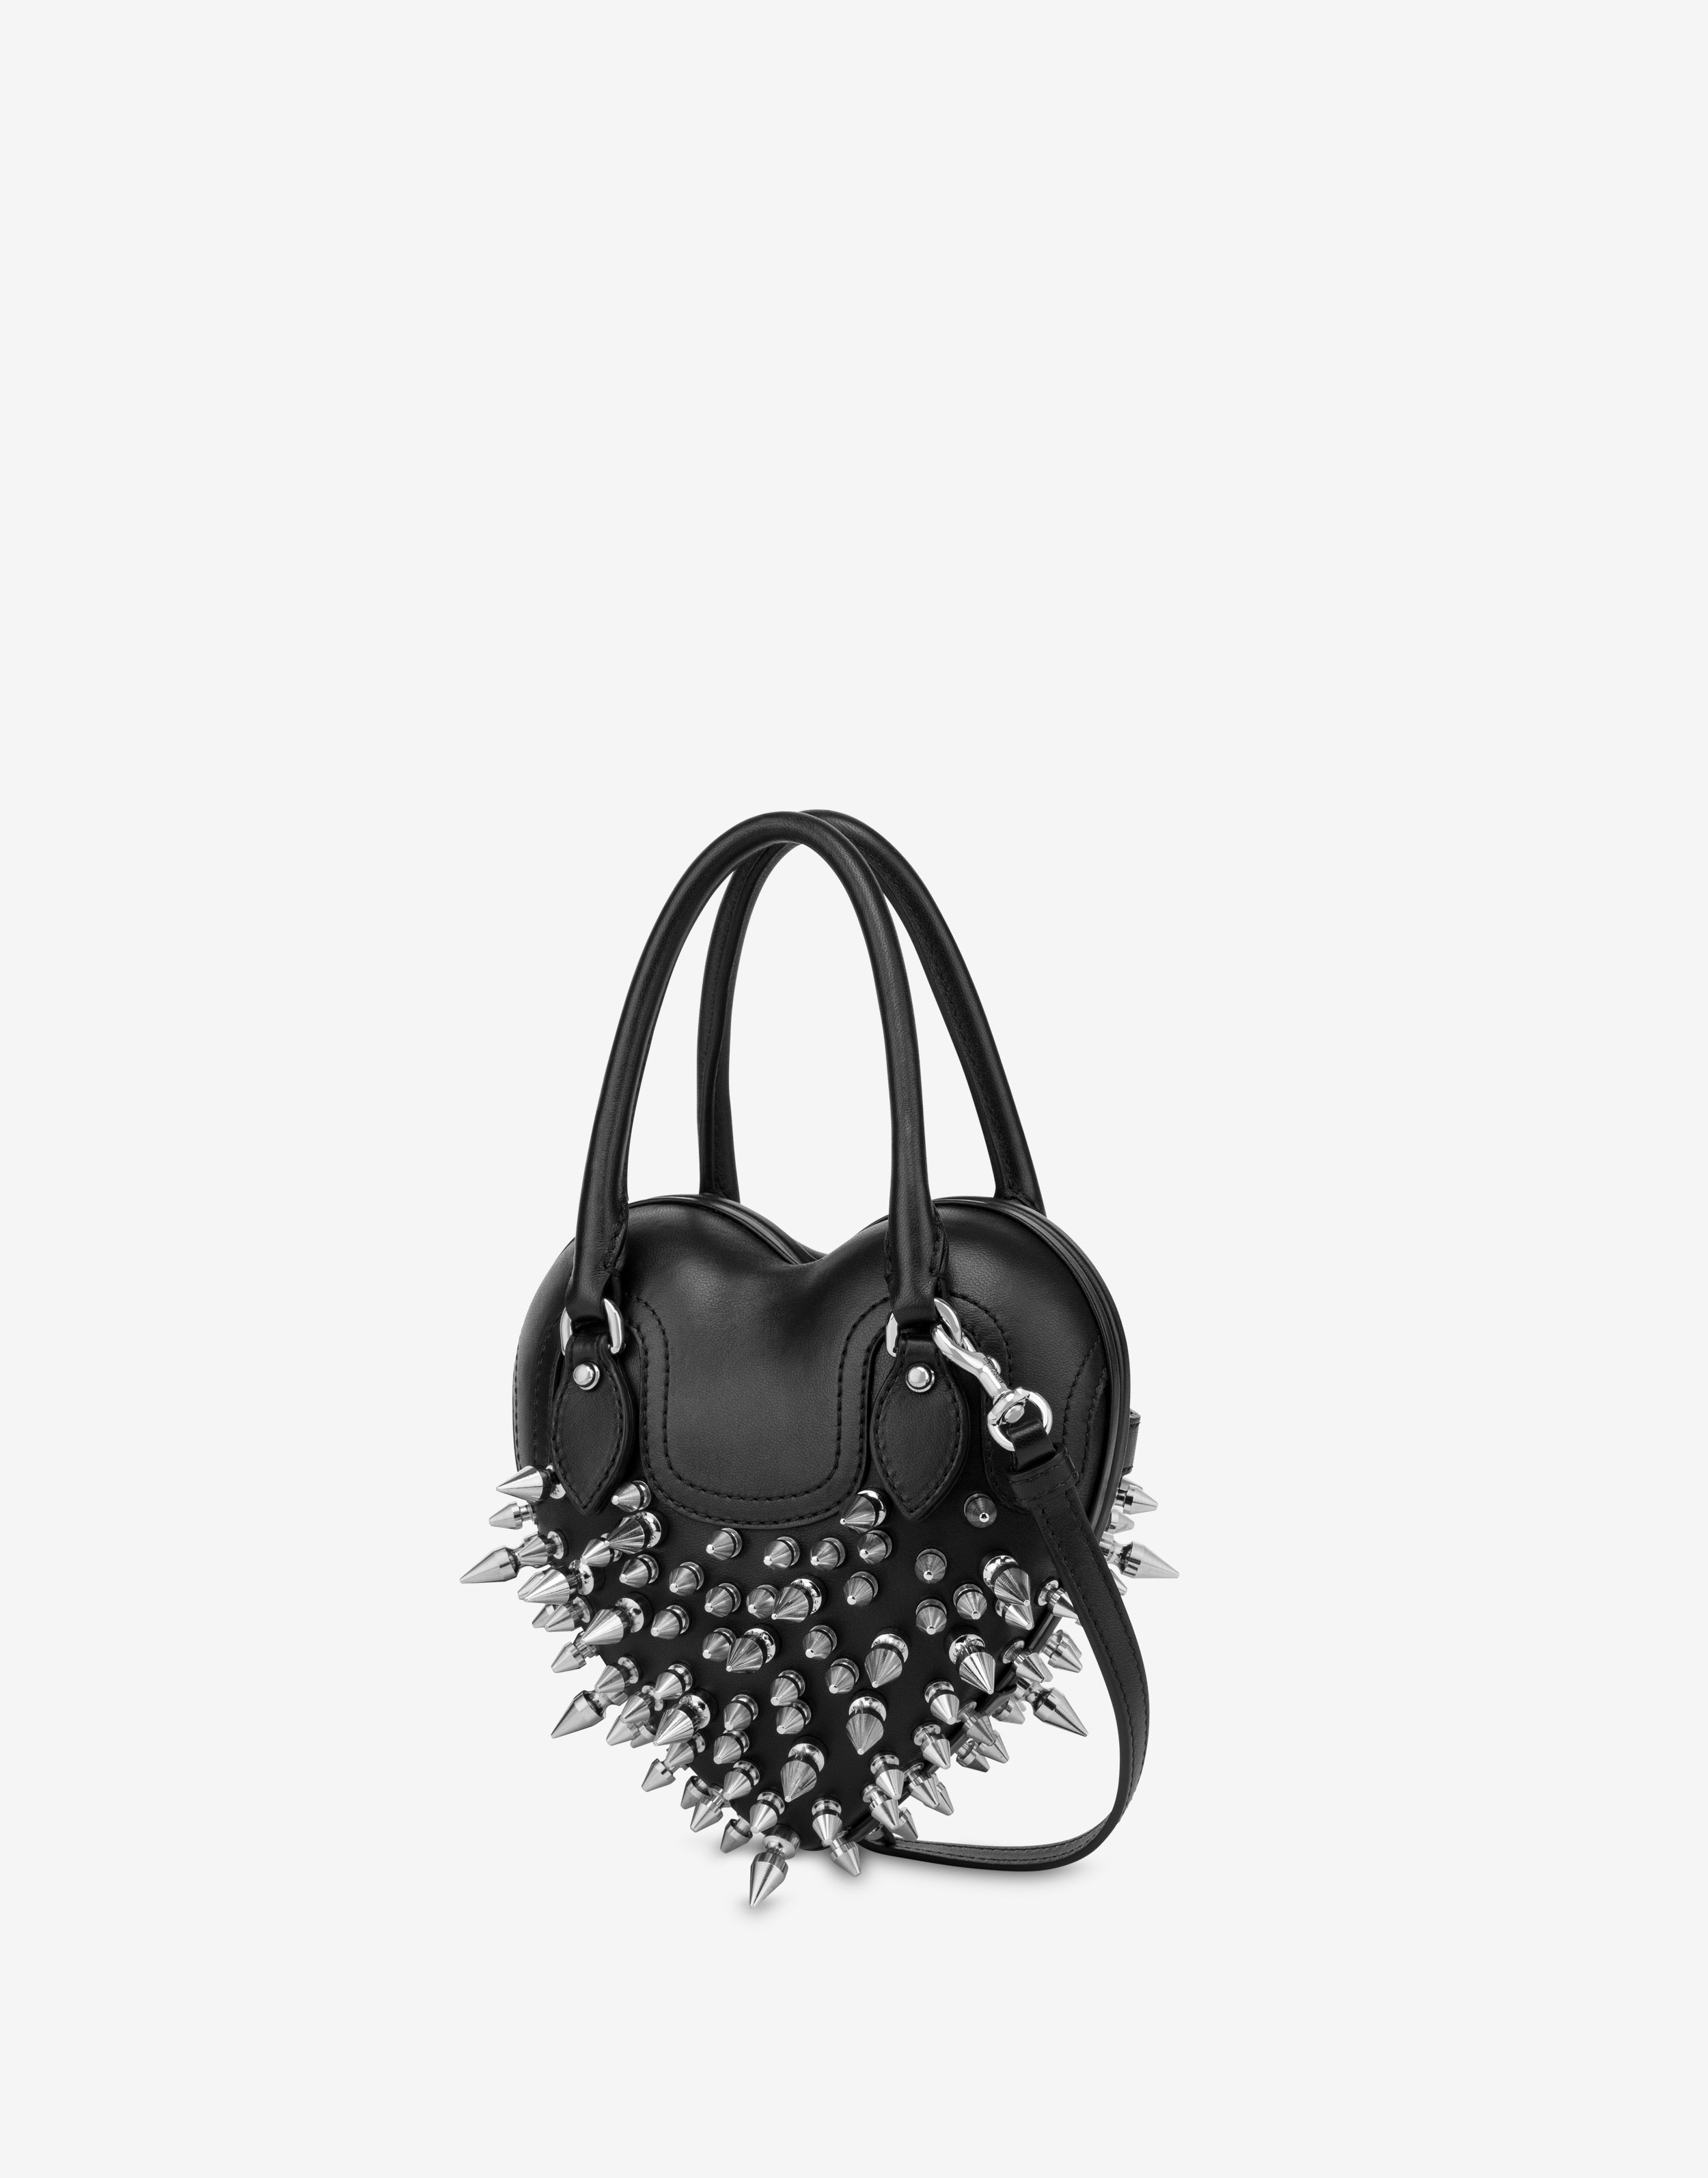 Replica Louis Vuitton Speedy Handbag Bag Purse - clothing & accessories -  by owner - apparel sale - craigslist